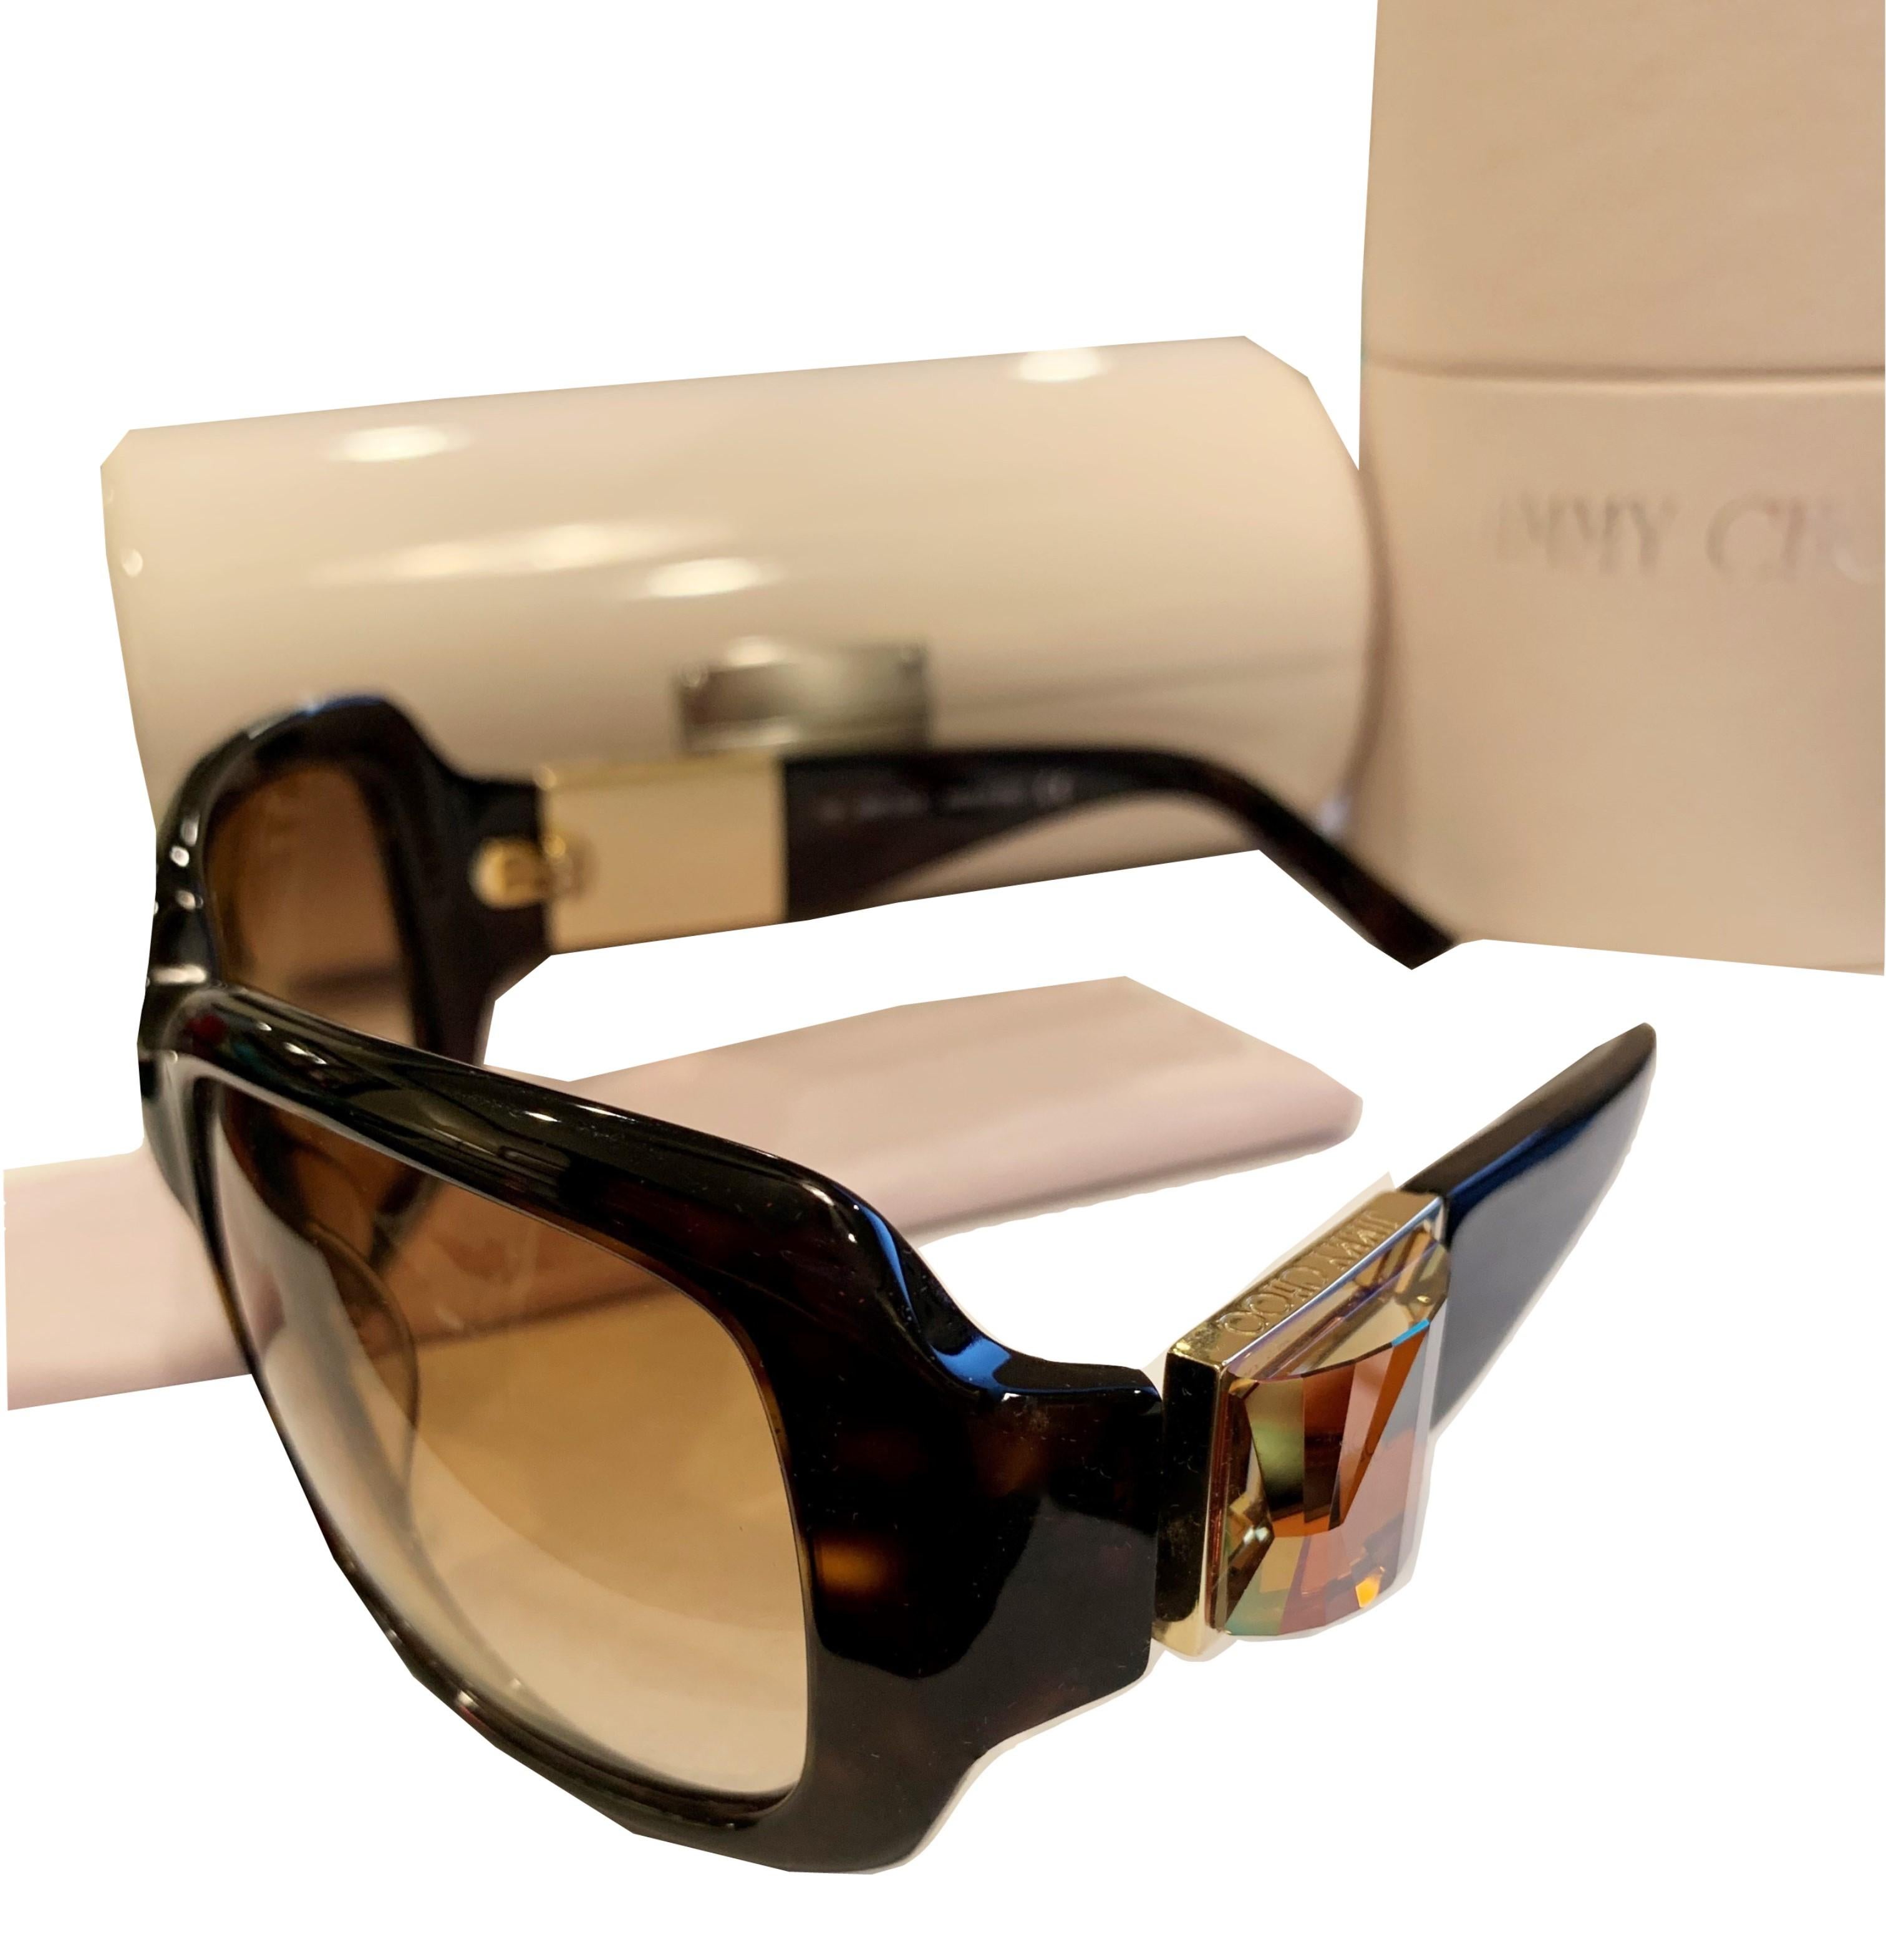 New Jimmy Choo Swarovski Sunglasses With Case & Box $595 1